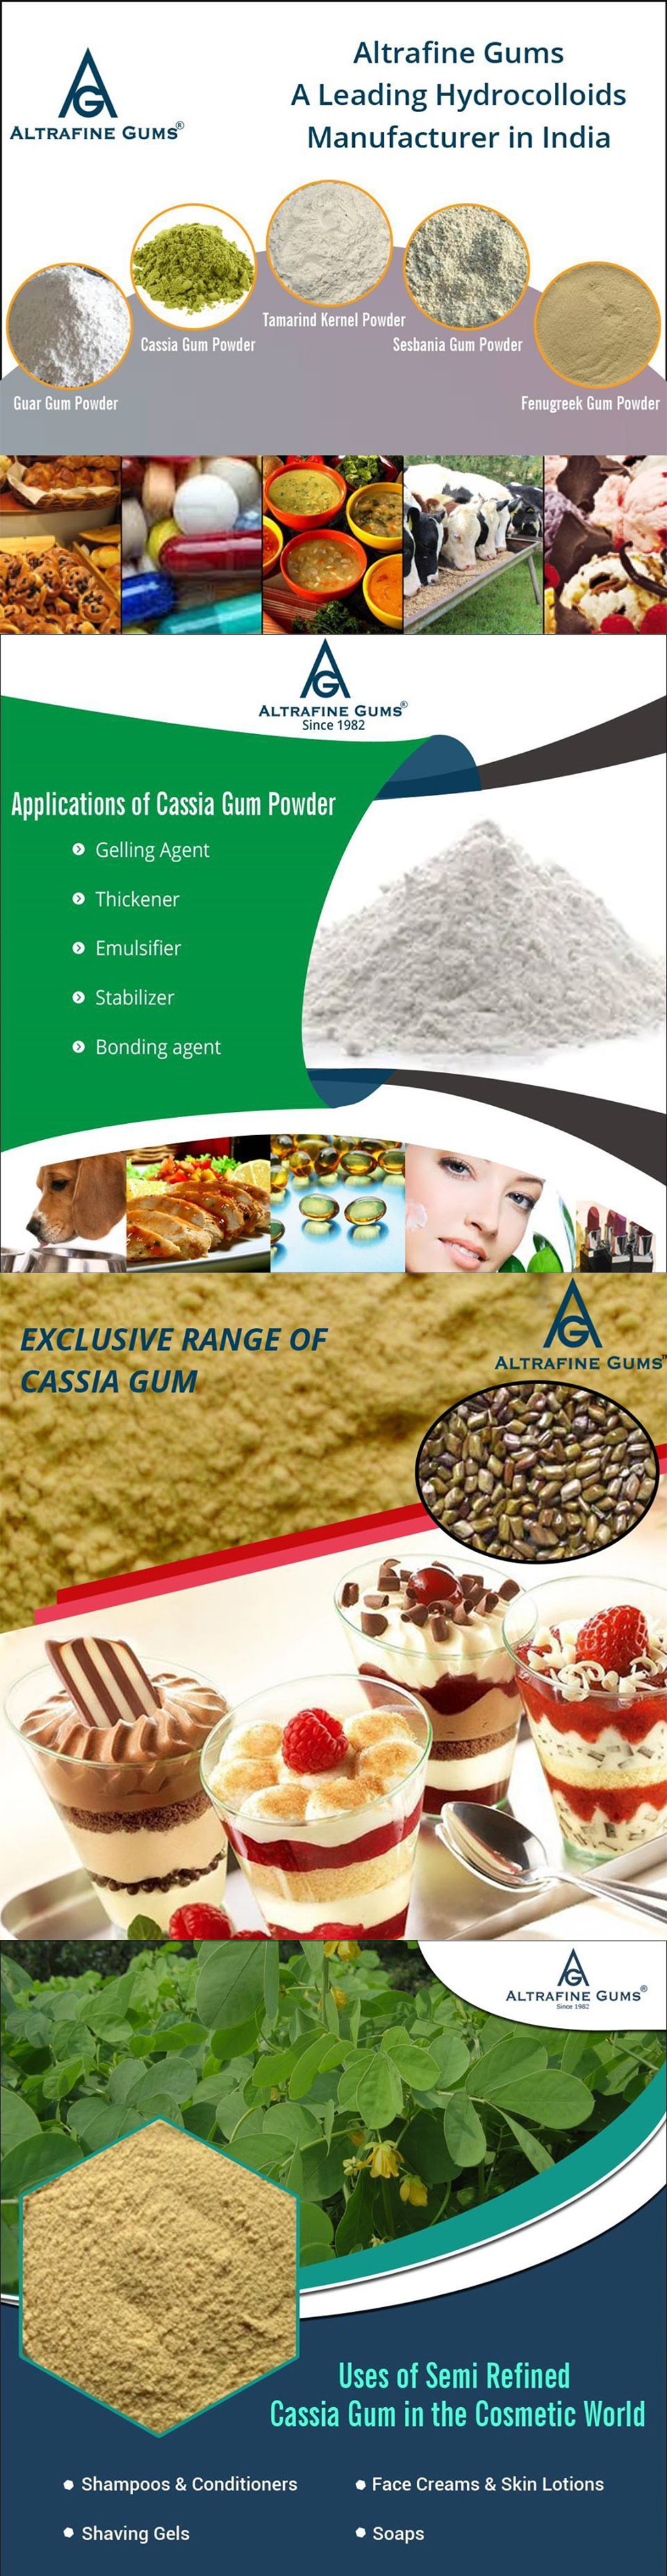 Applications of Cassia Gum Powder in Nutraceuticals